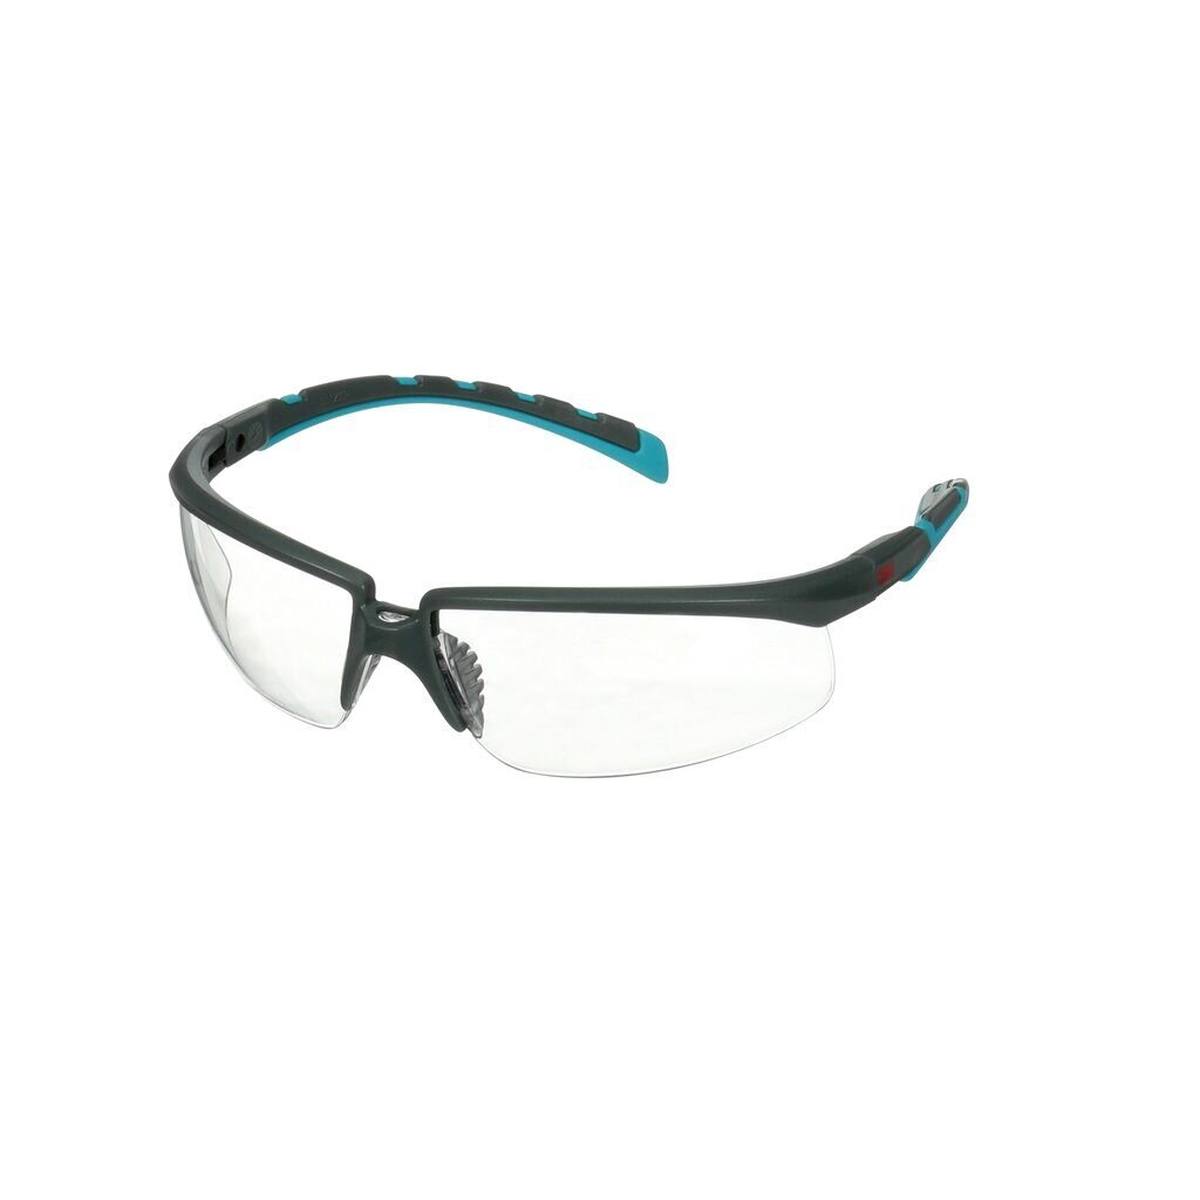 3M Solus 2000 safety spectacles, blue/grey temples, anti-fog/scratch-resistant, clear lens, angle-adjustable, S2001AF-BLU-EU